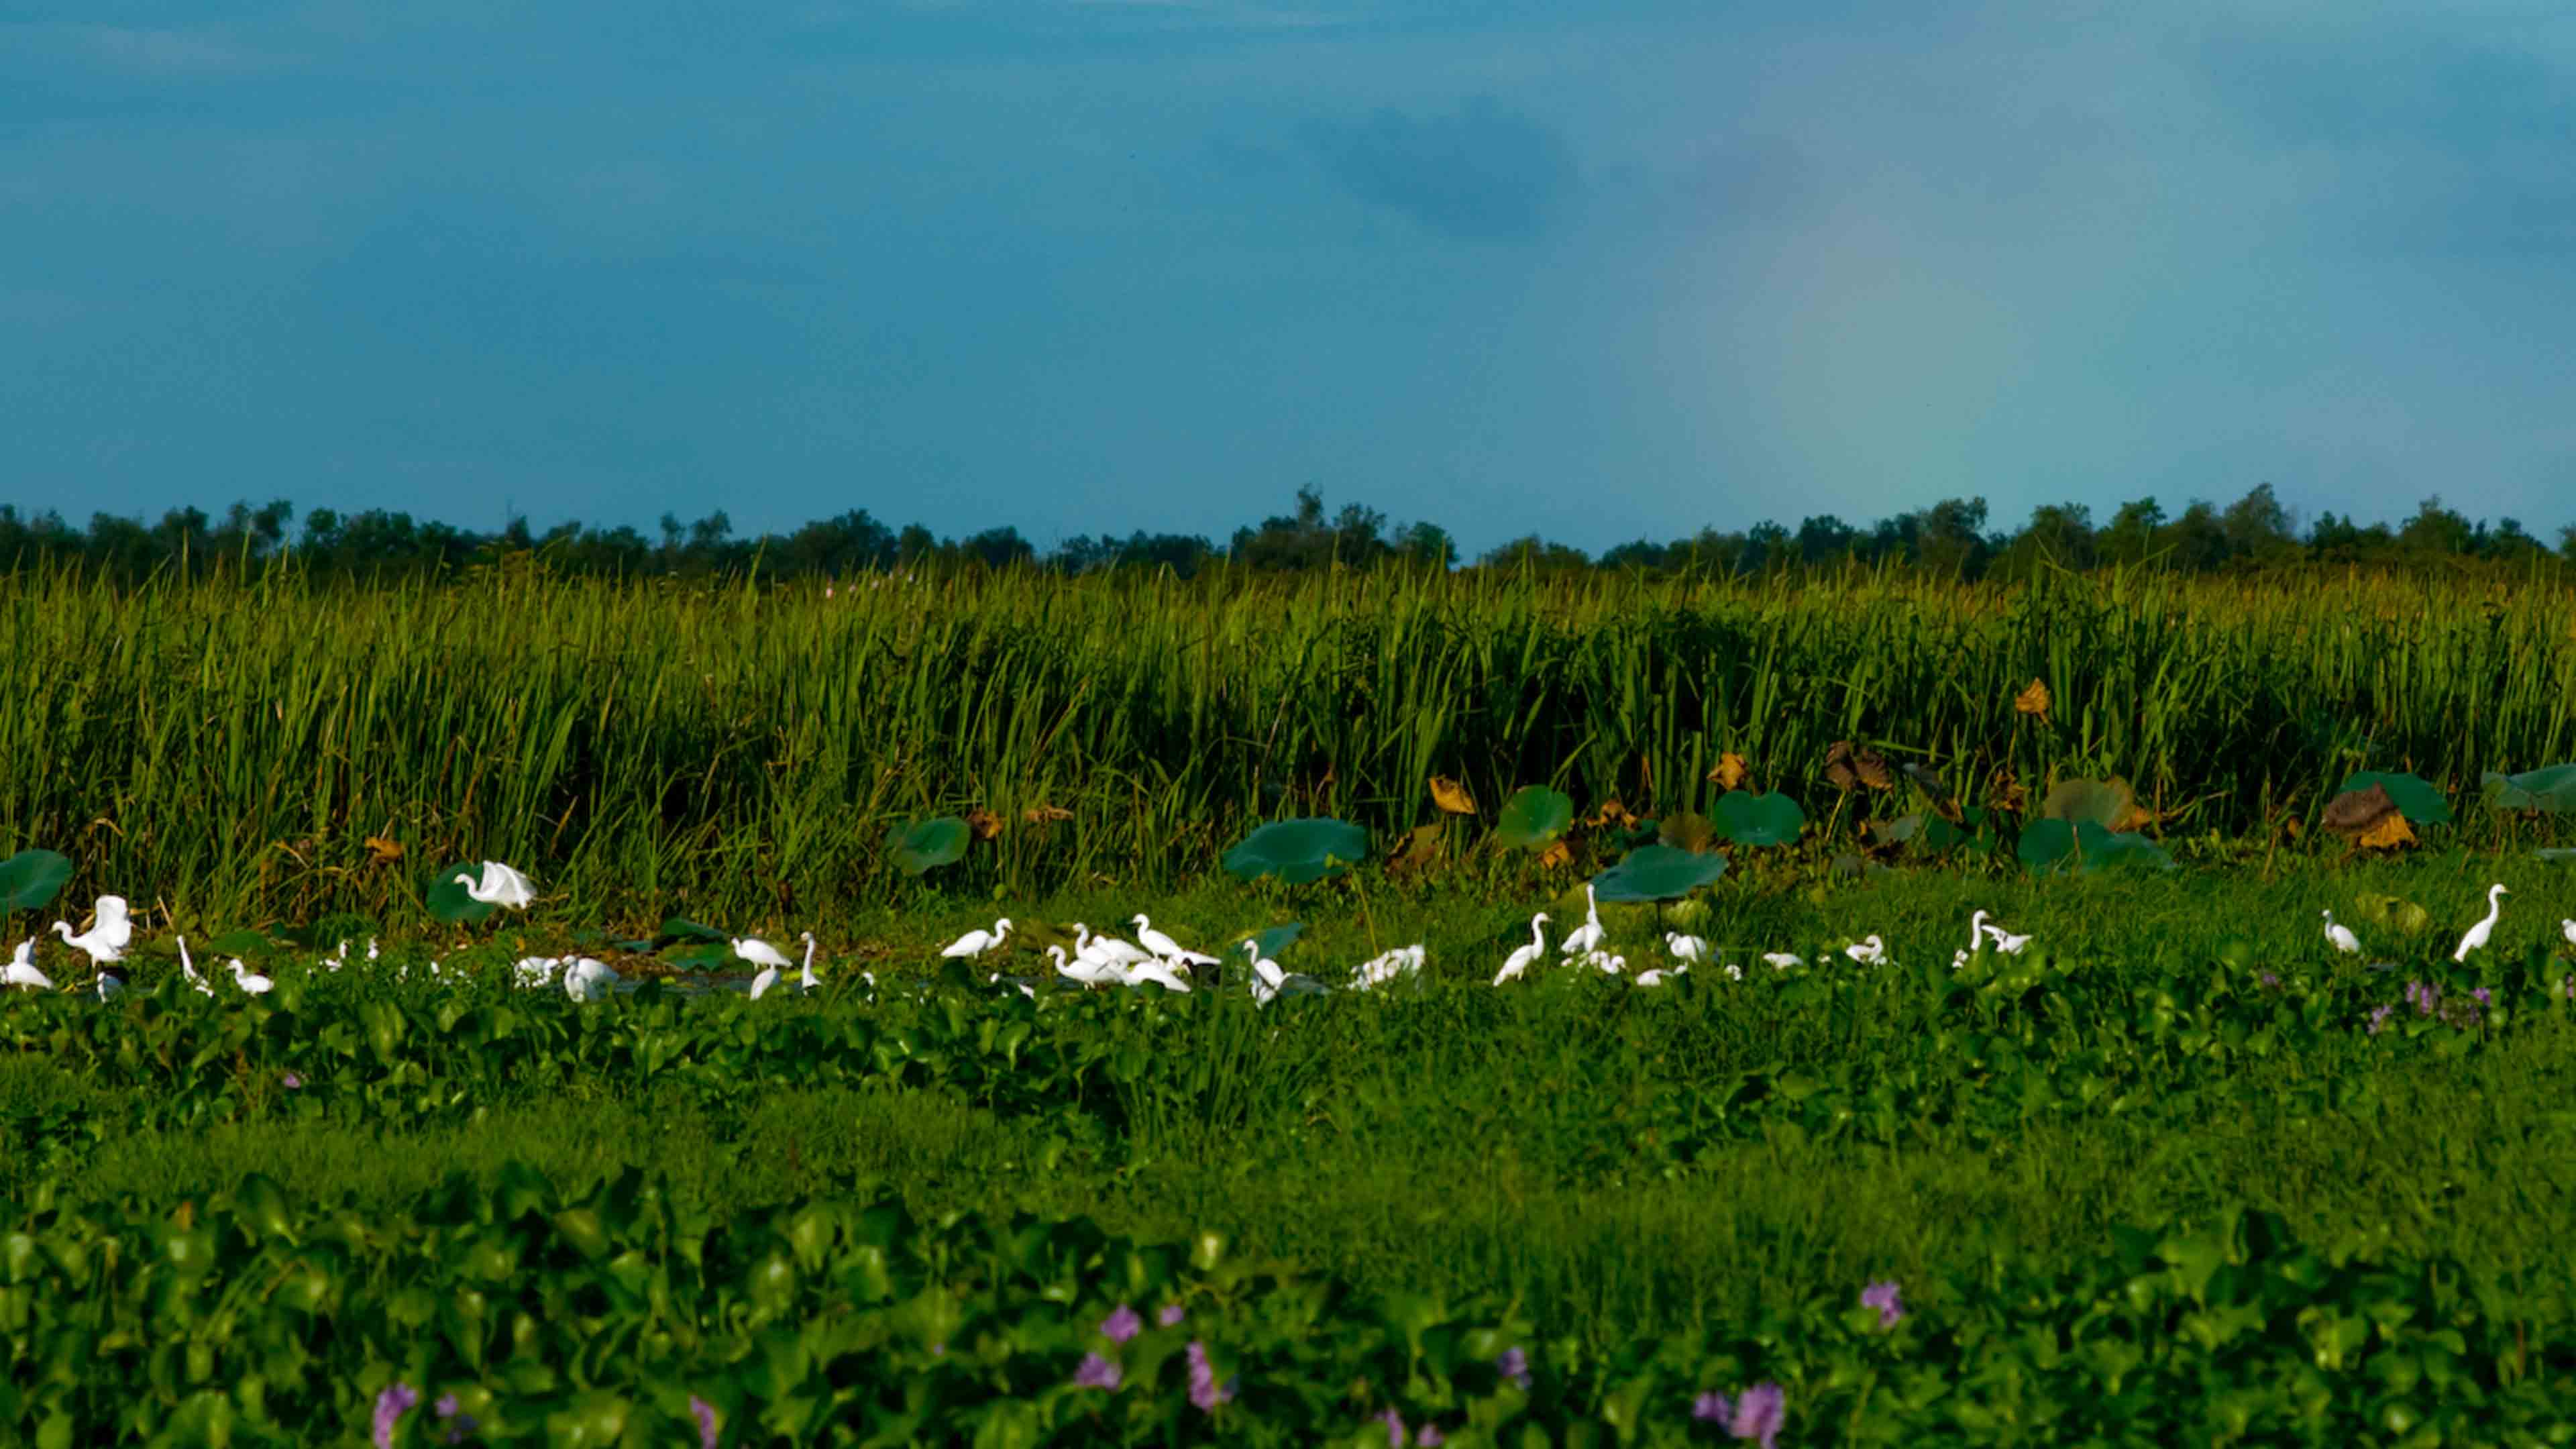 Group of long-necked, long-legged waterbirds in marsh